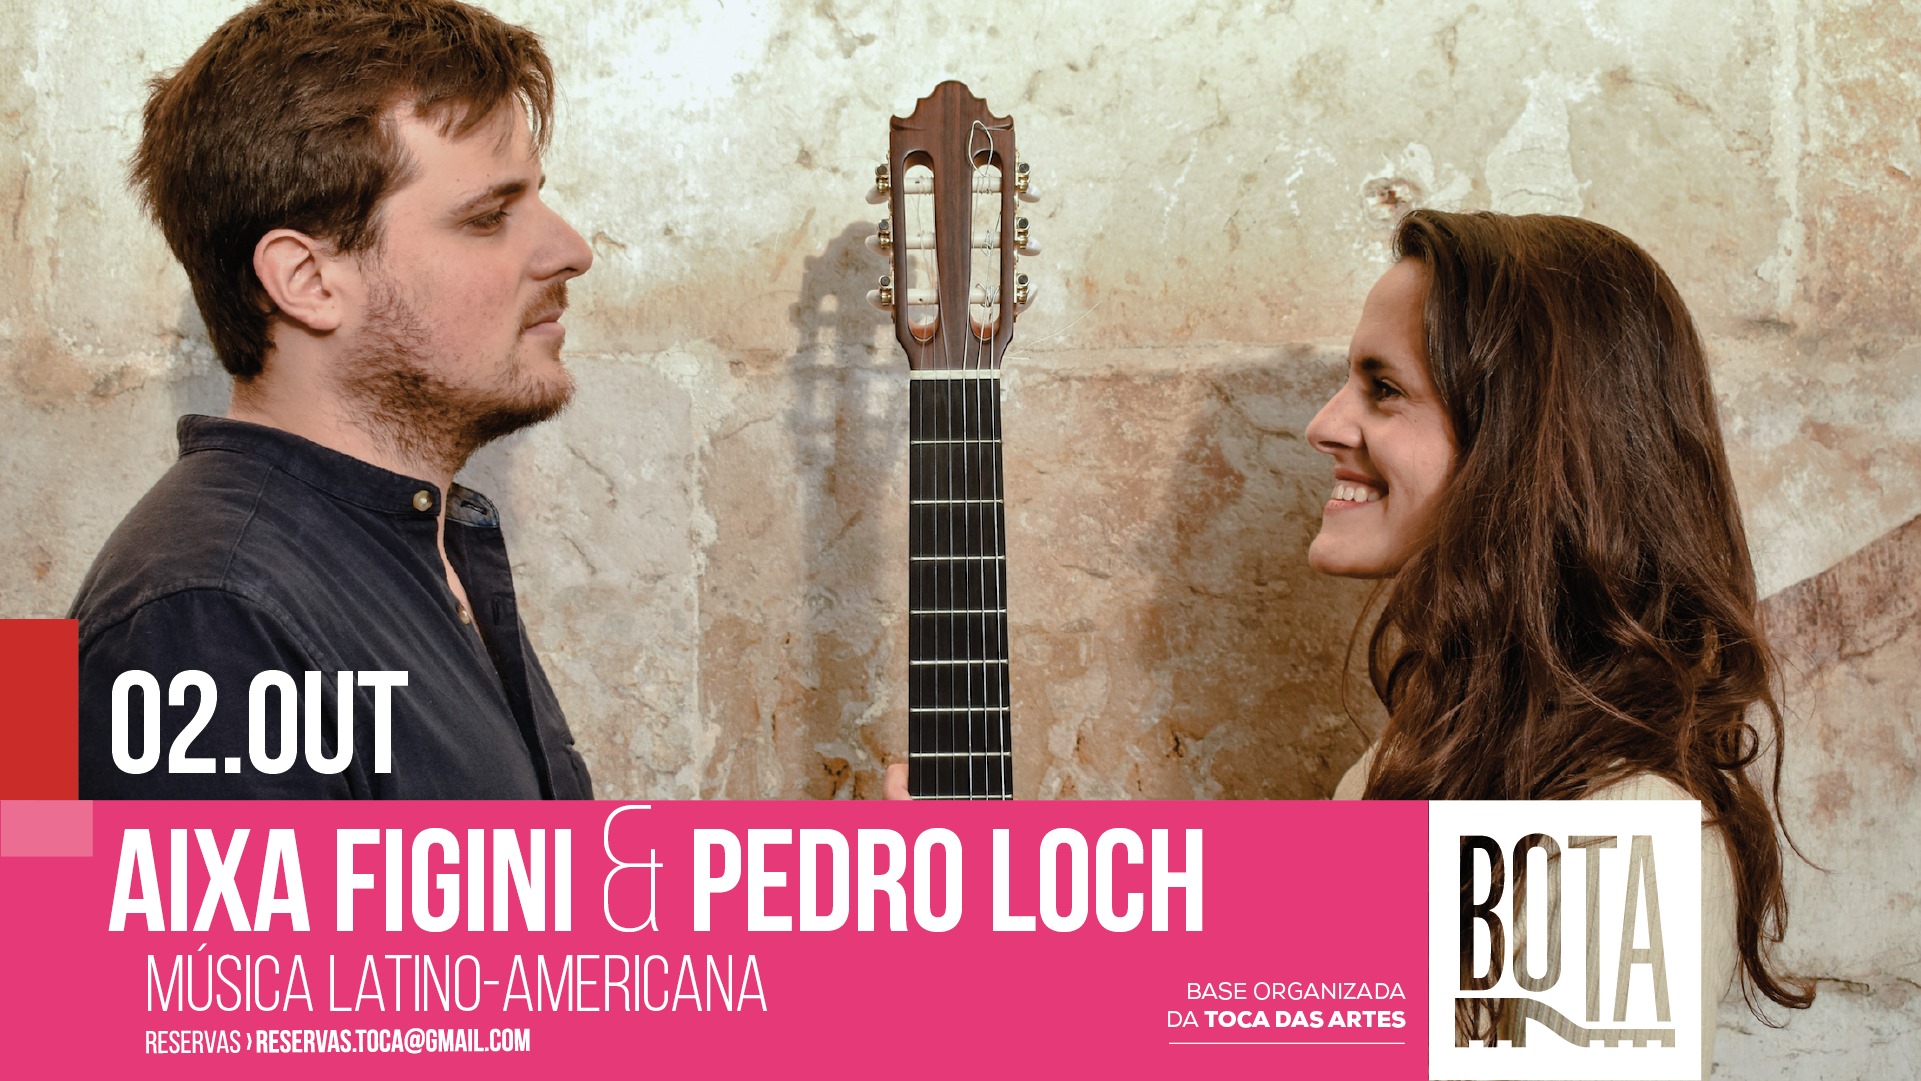 Aixa Figini & Pedro Loch | Música Latino-americana @B.O.T.A